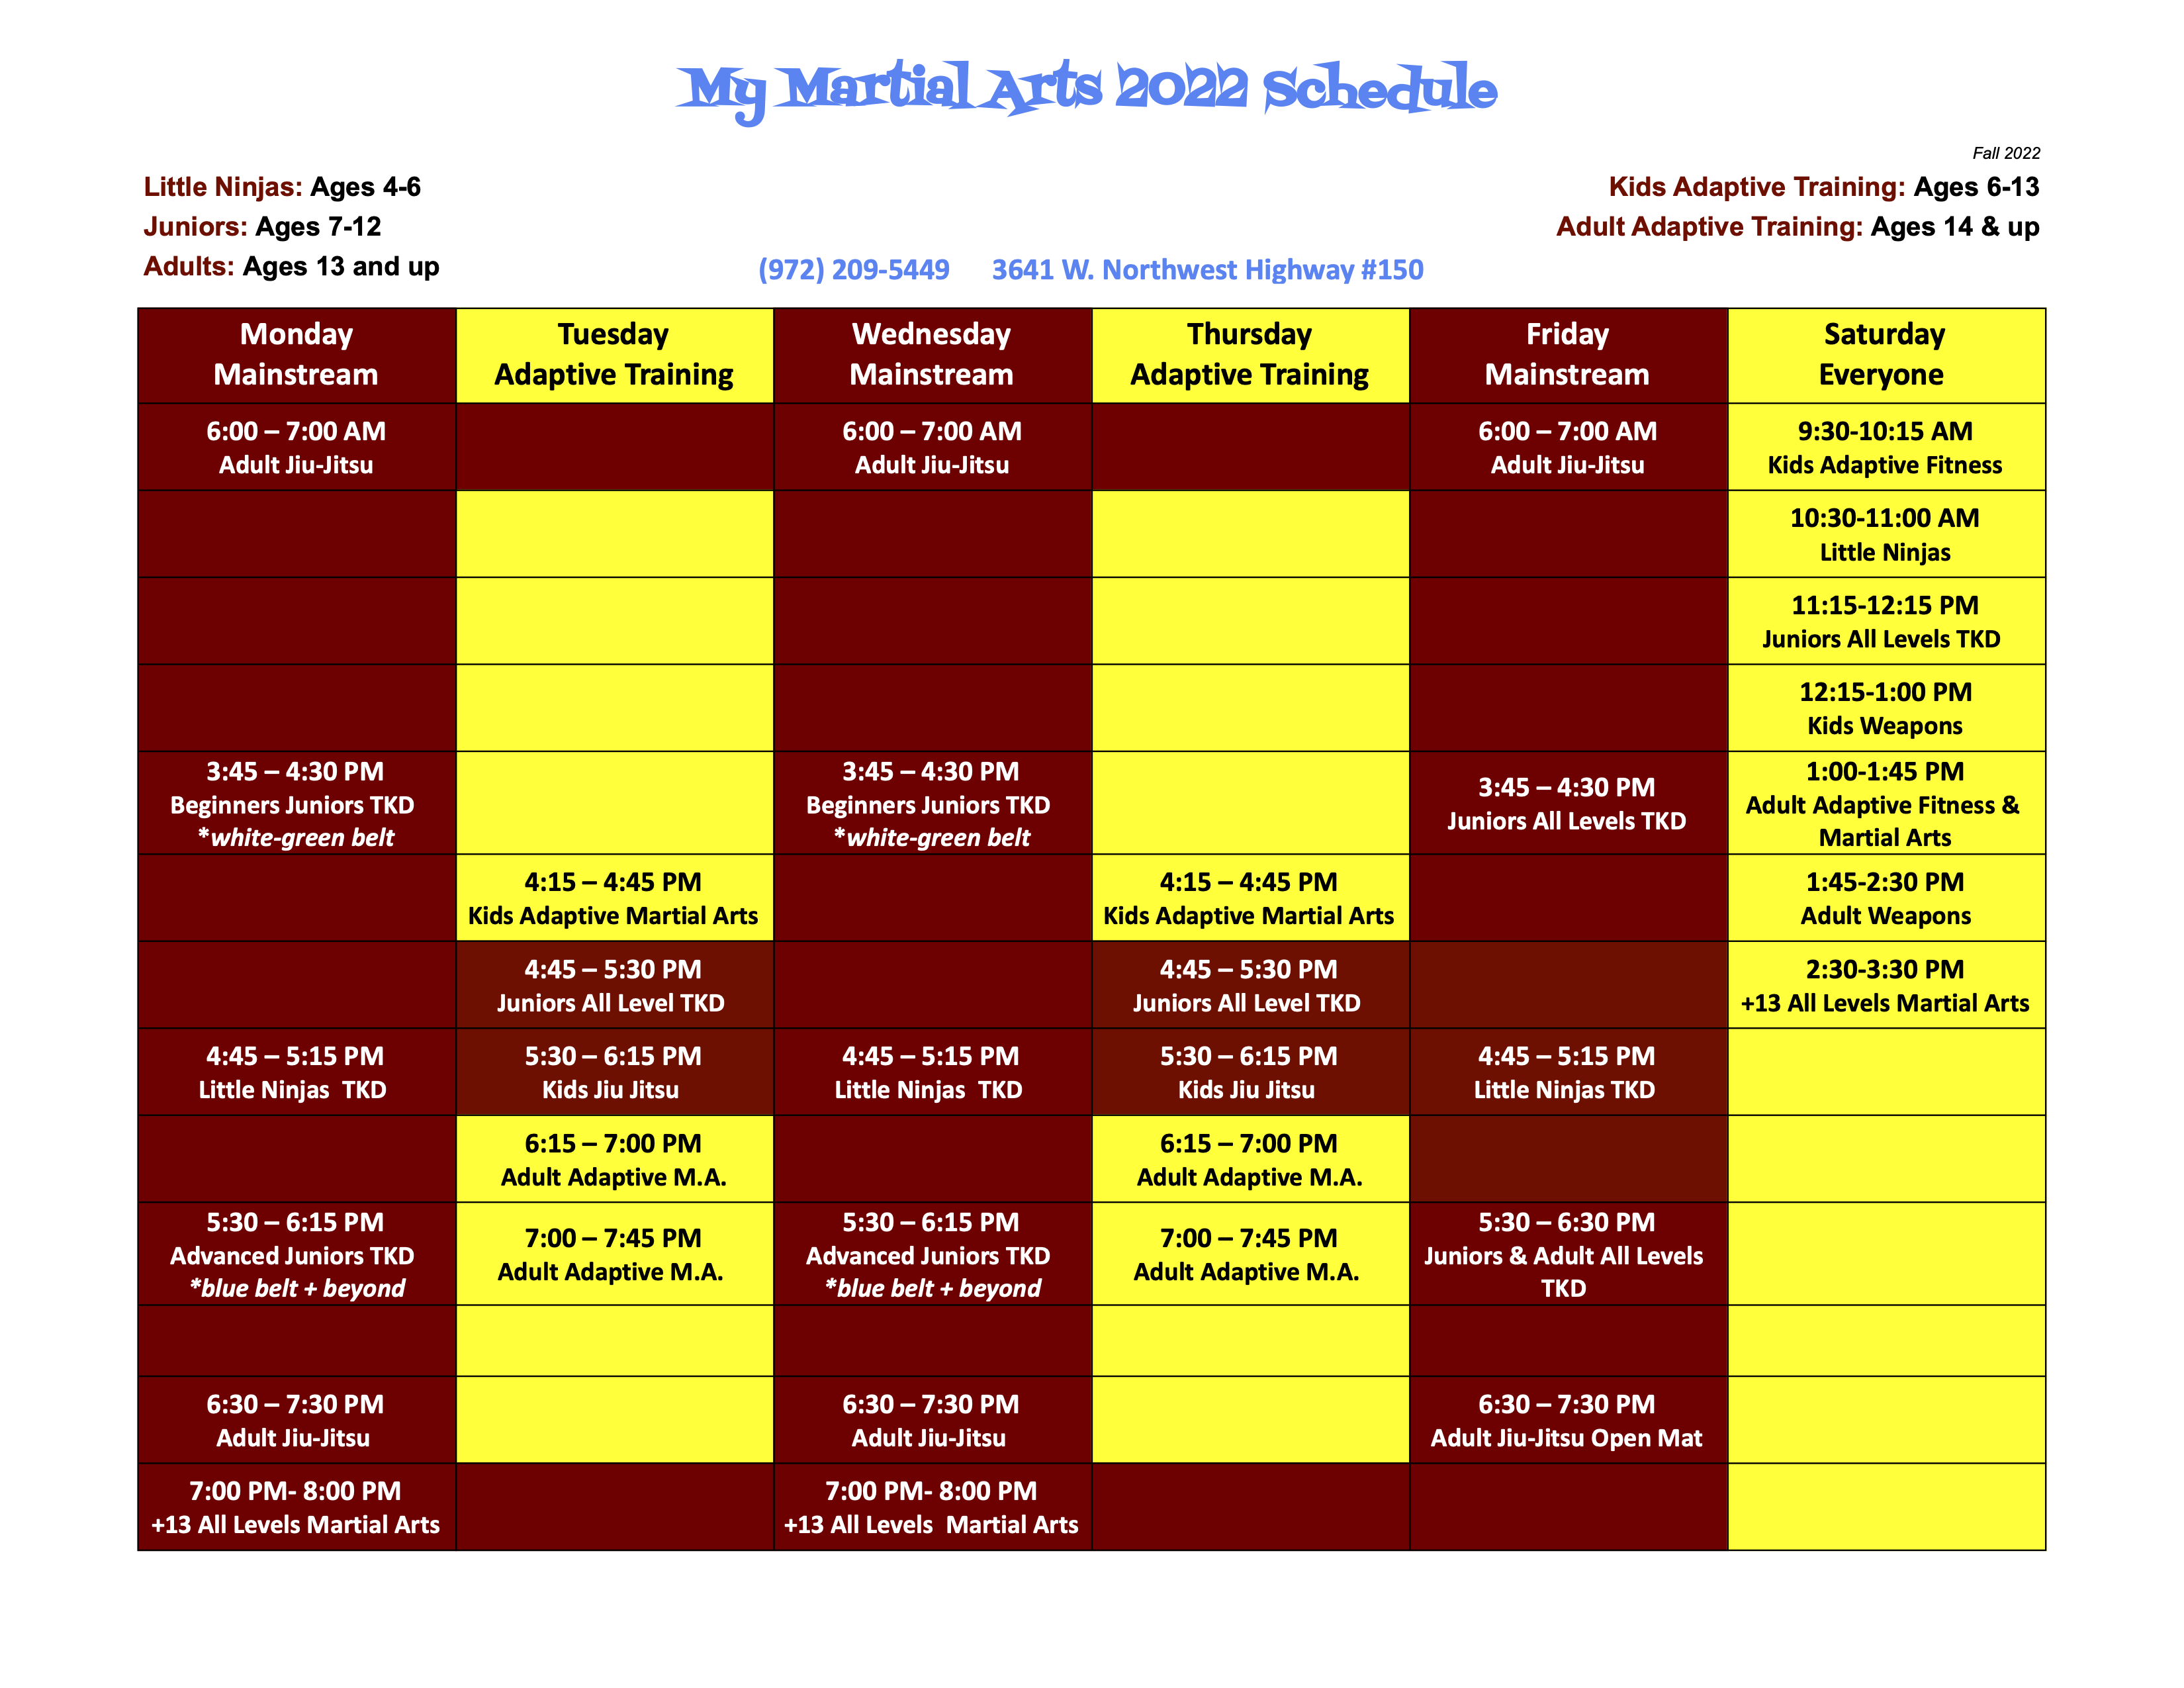 Schedule - My Martial Arts